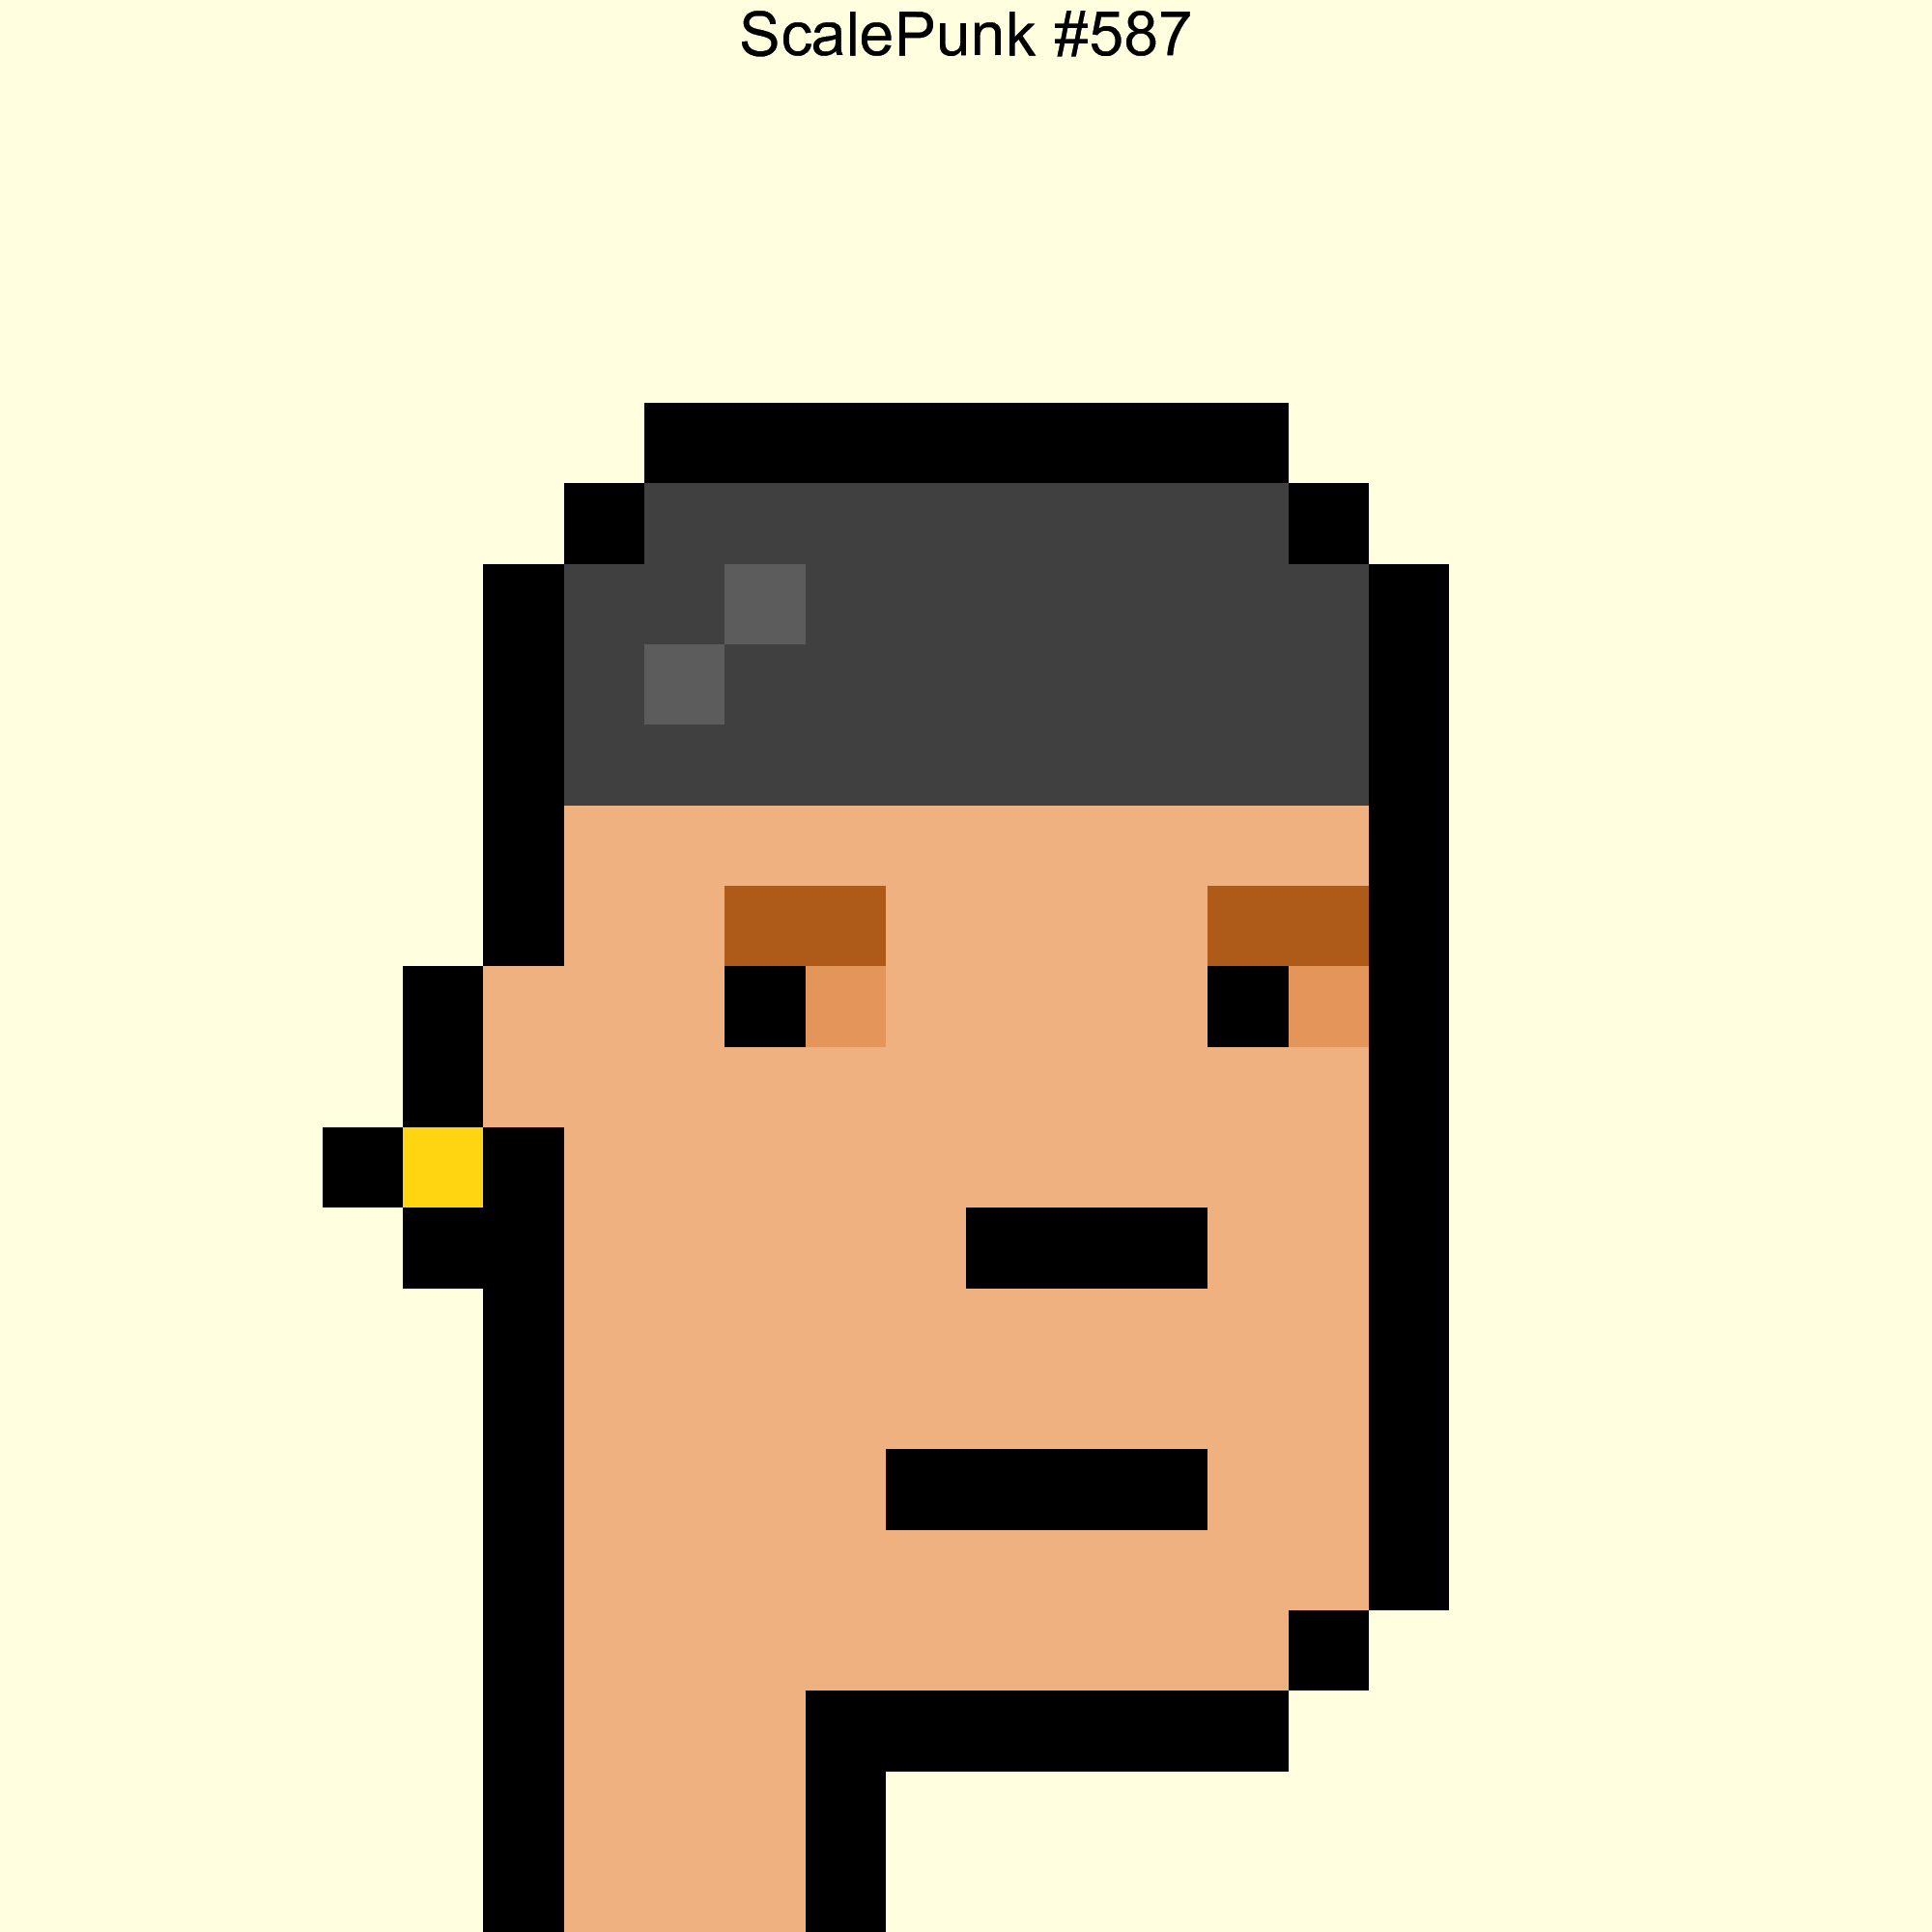 Punk 587